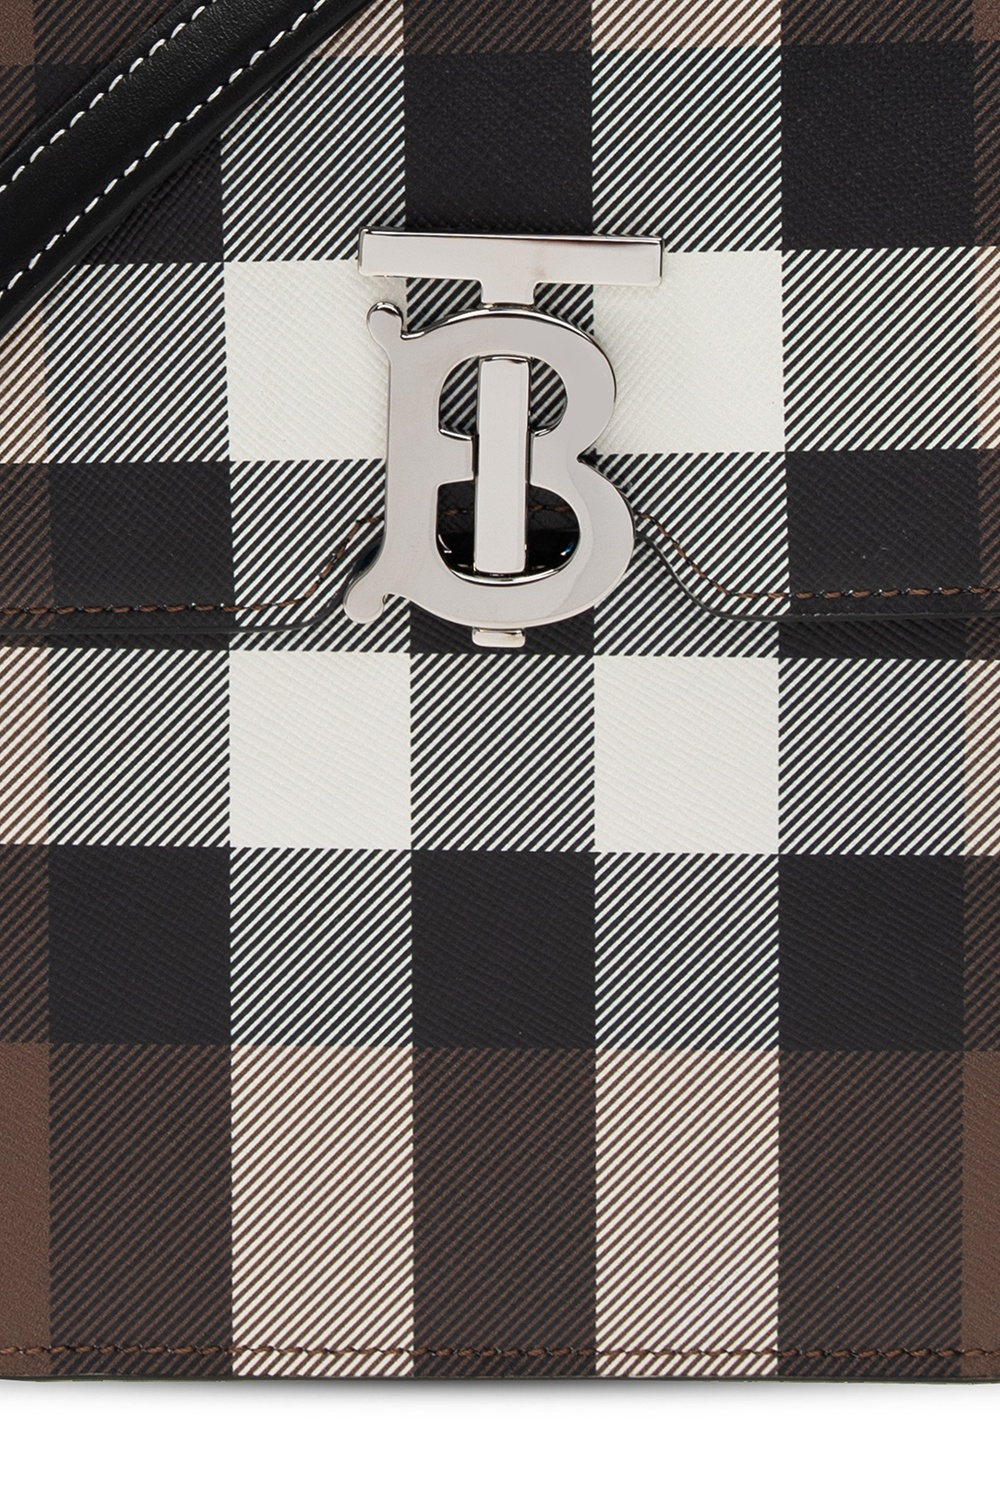 Burberry burberry icon stripe monogram print wool silk square large scarf item